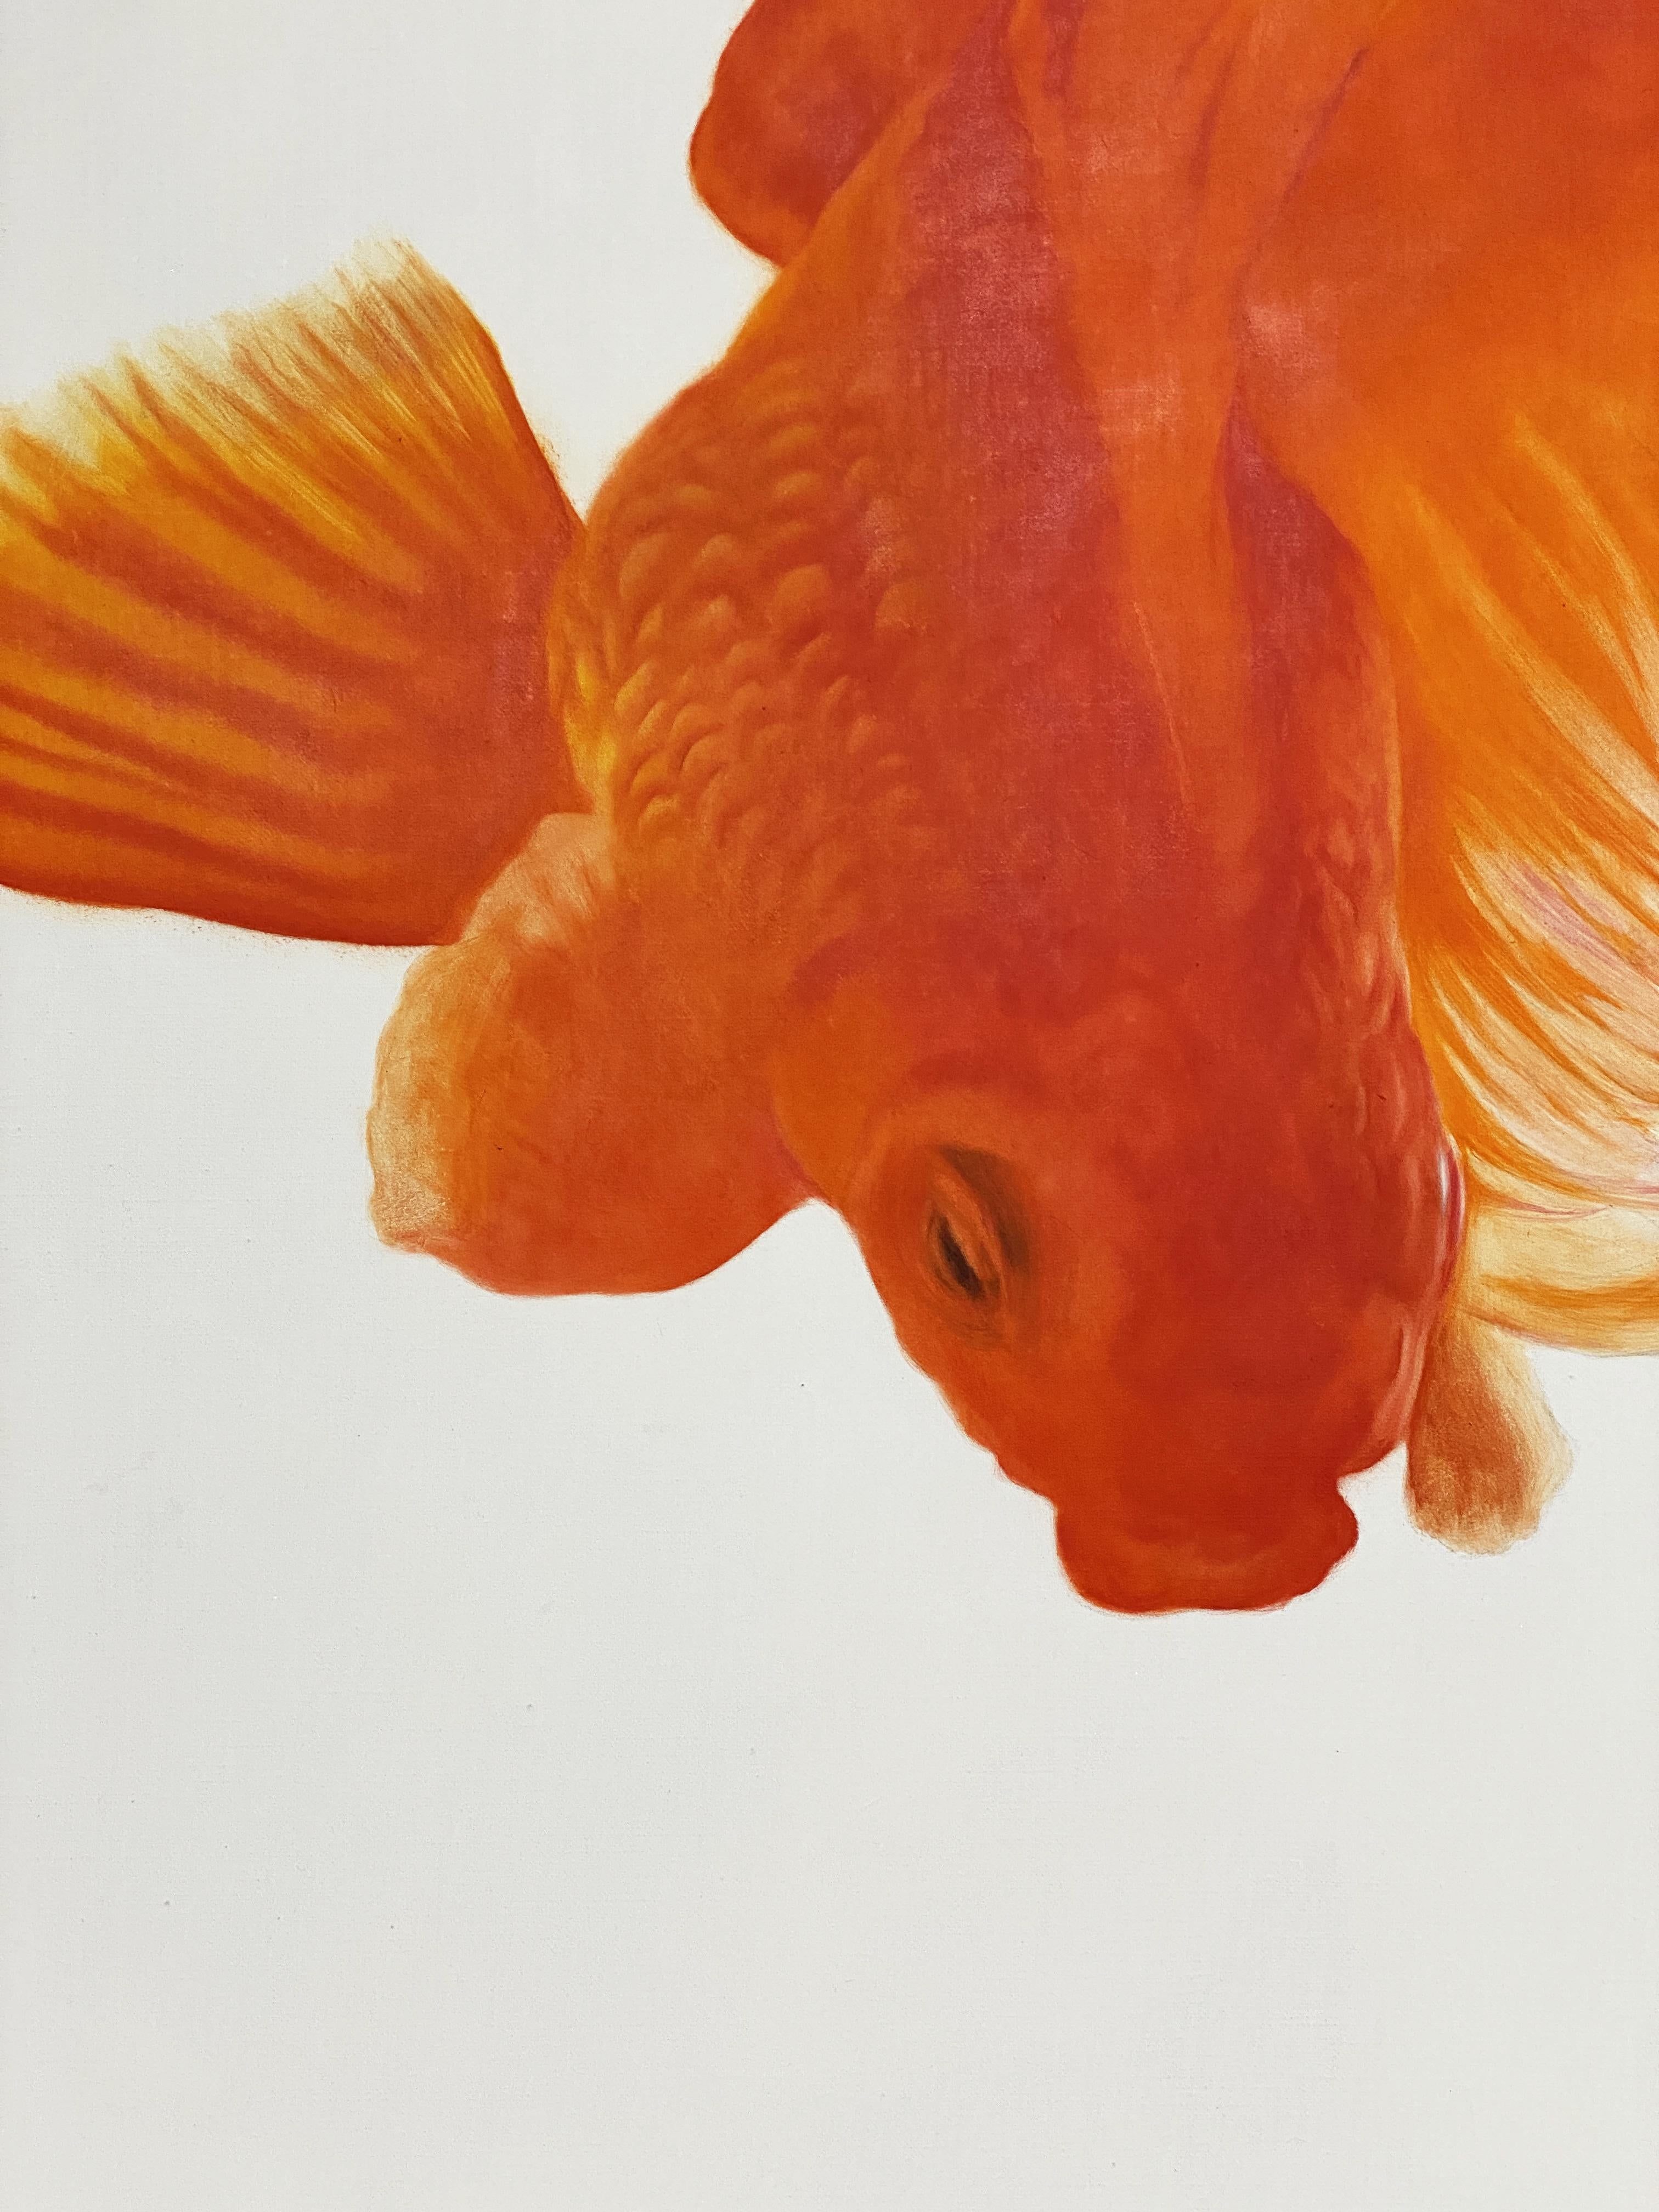 Goldfischchen Rot und Schwarz Swim Together For Prosperous and Successful Fortune – Painting von Feng Yi Chen